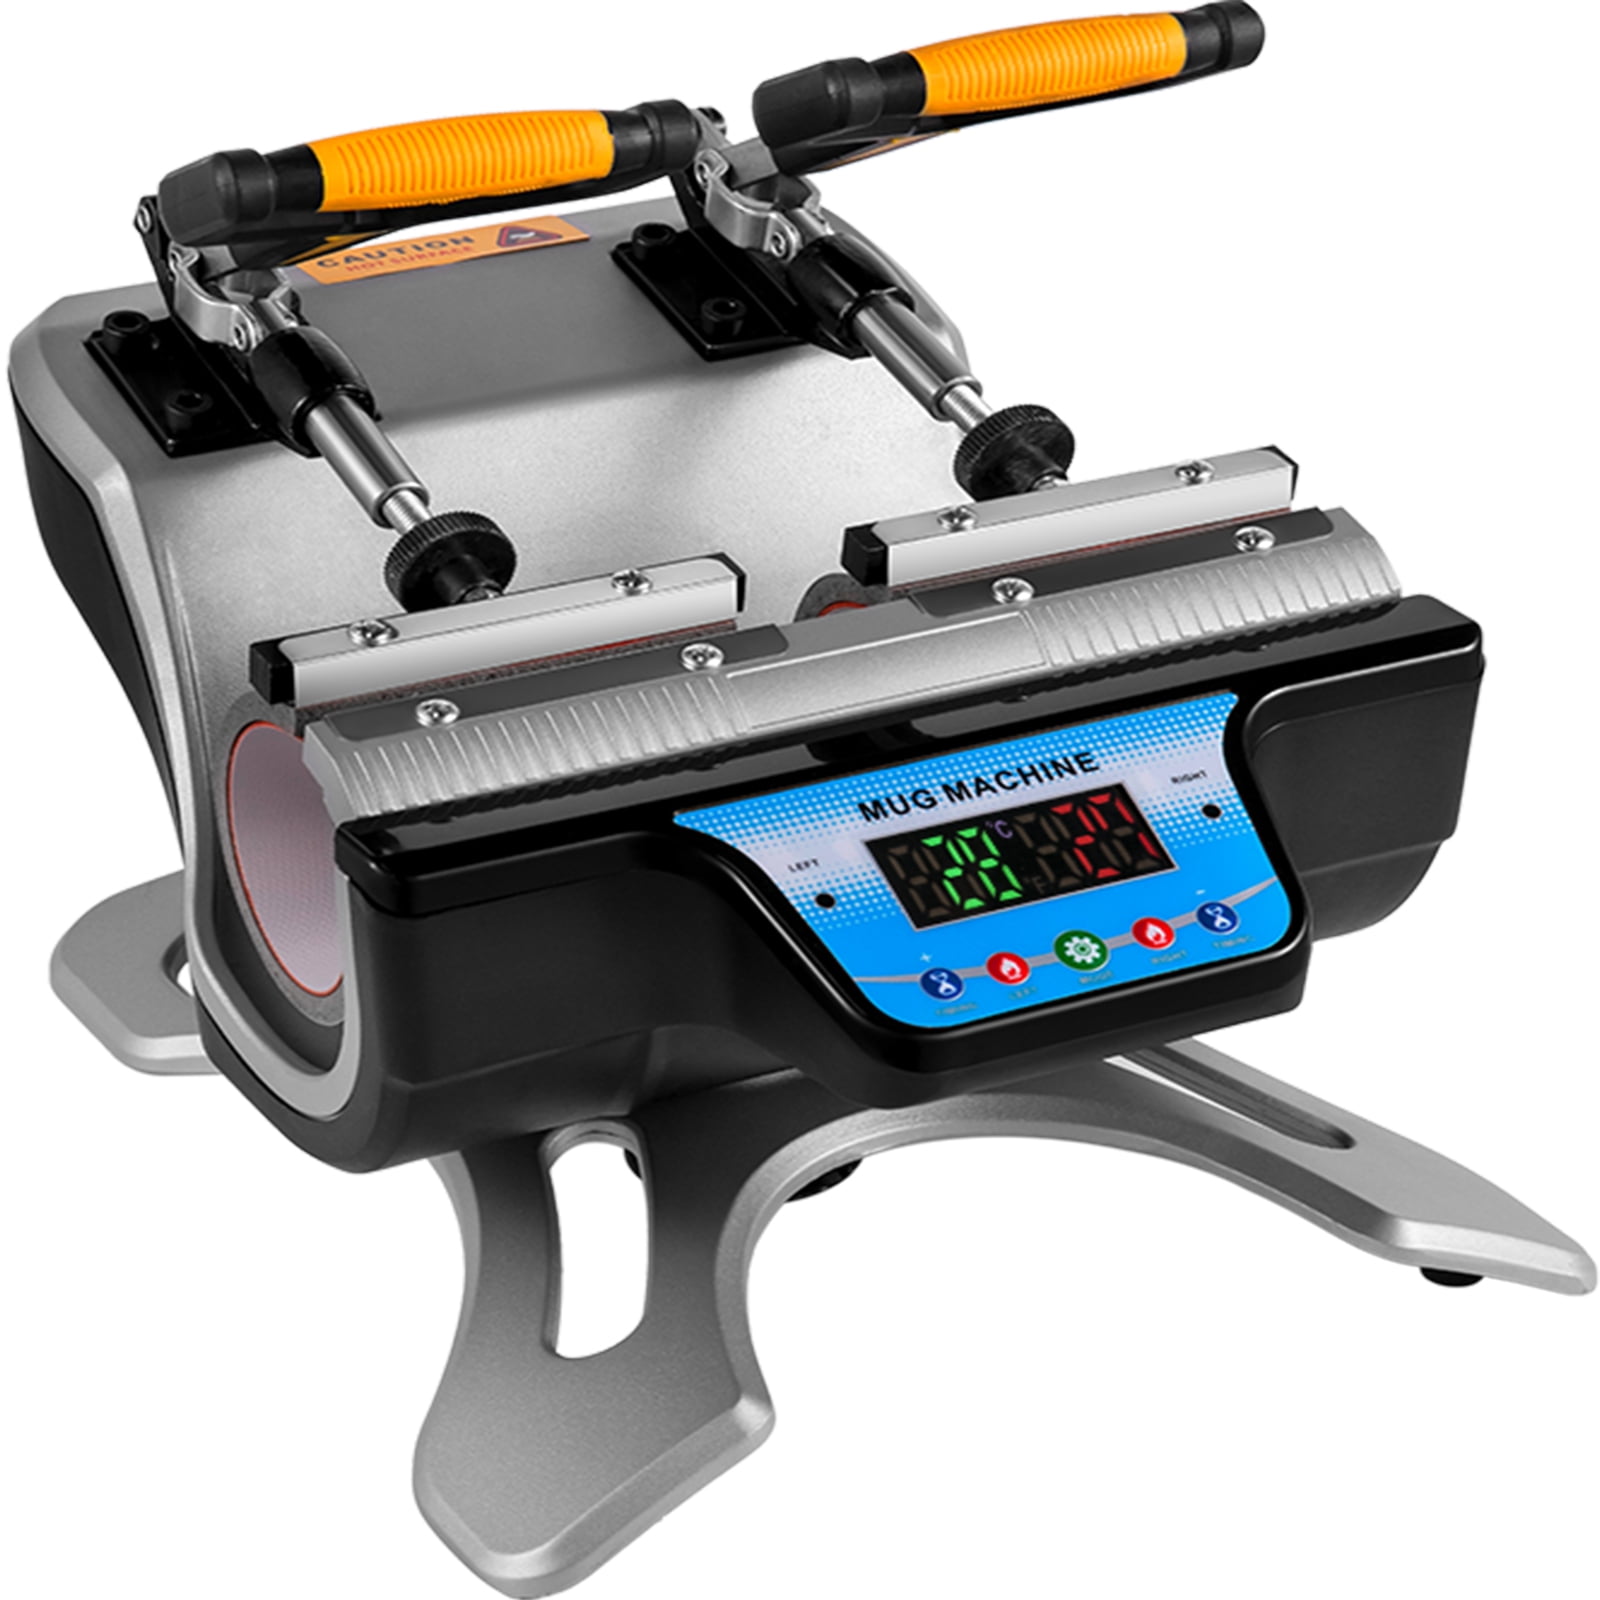 6-in-1 Digital Transfer Heat Press Machine - Costway